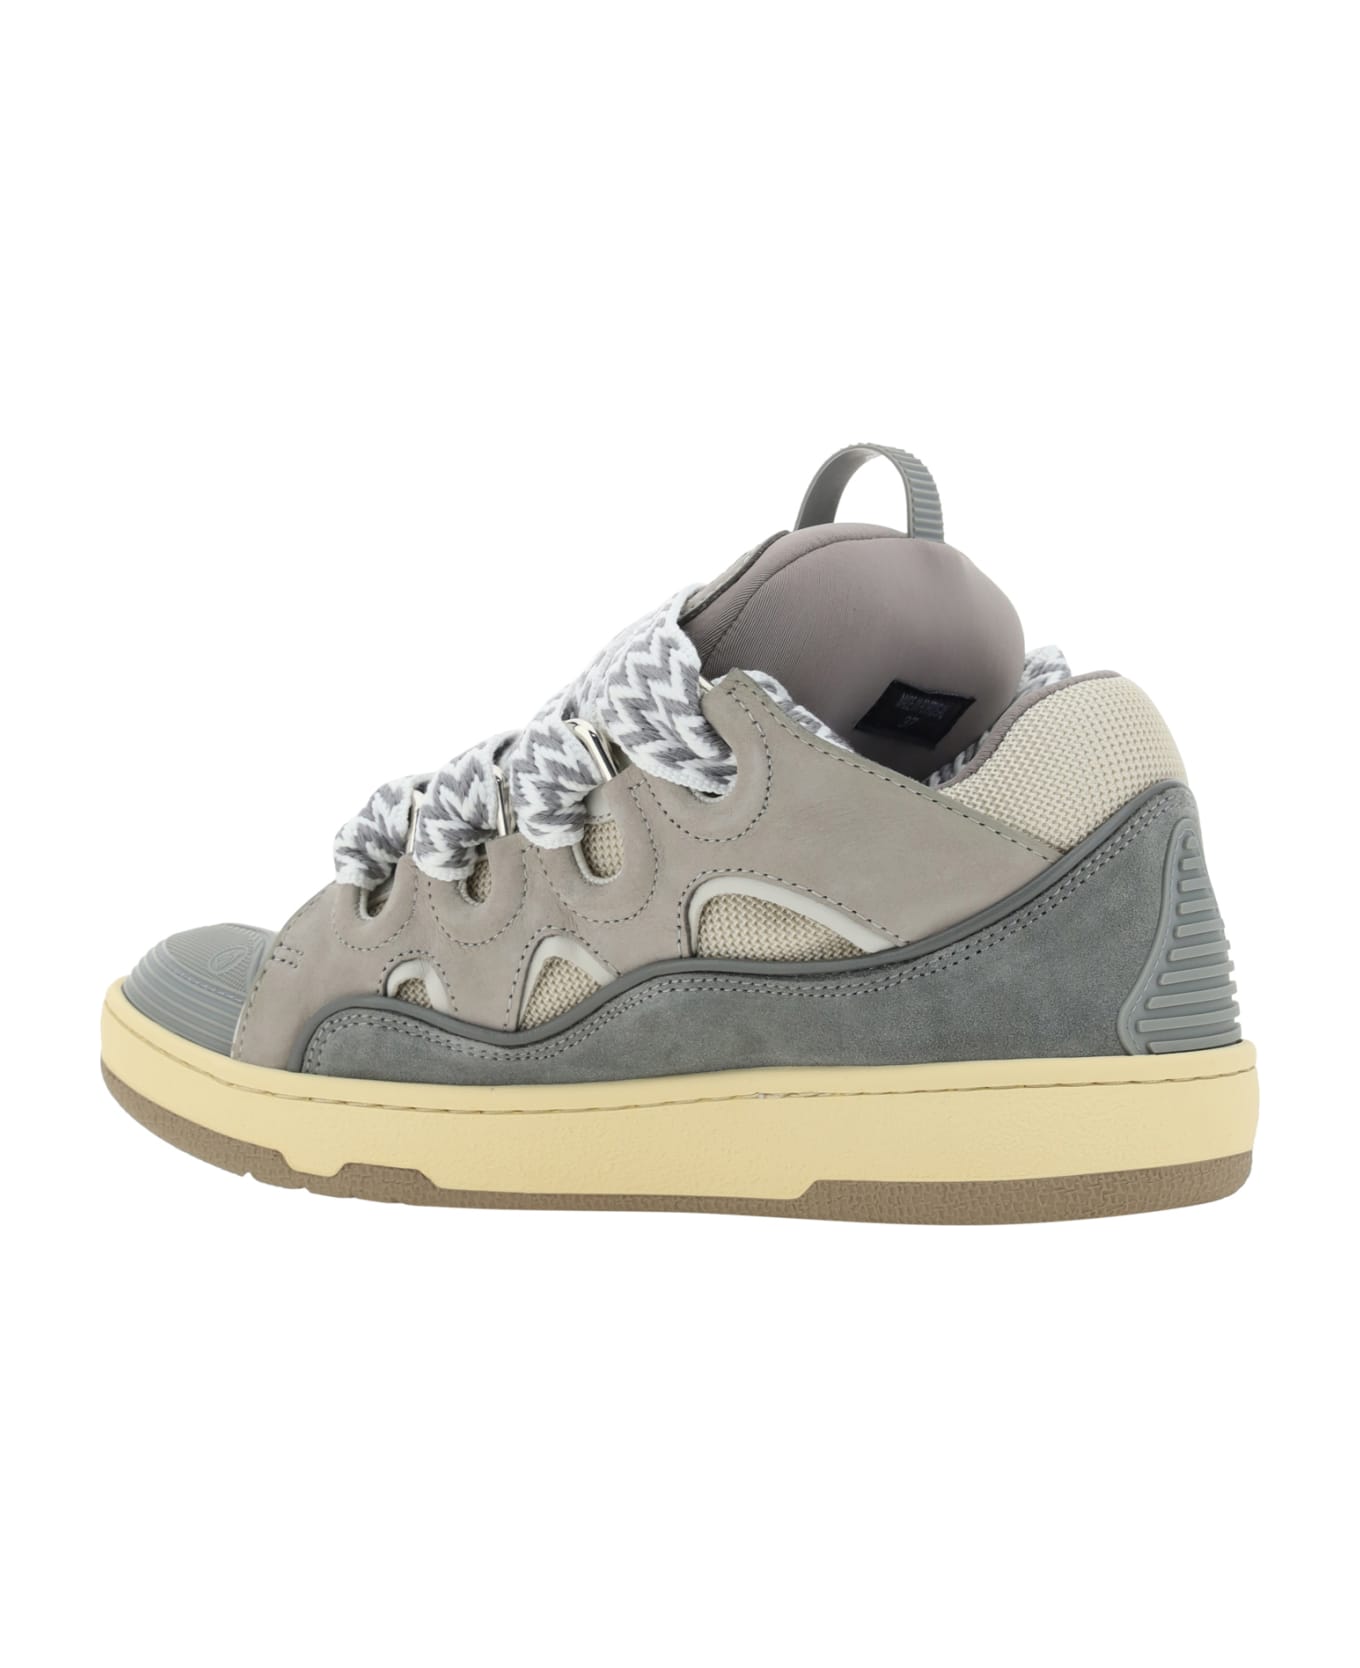 Lanvin Sneakers - Grey 2 スニーカー